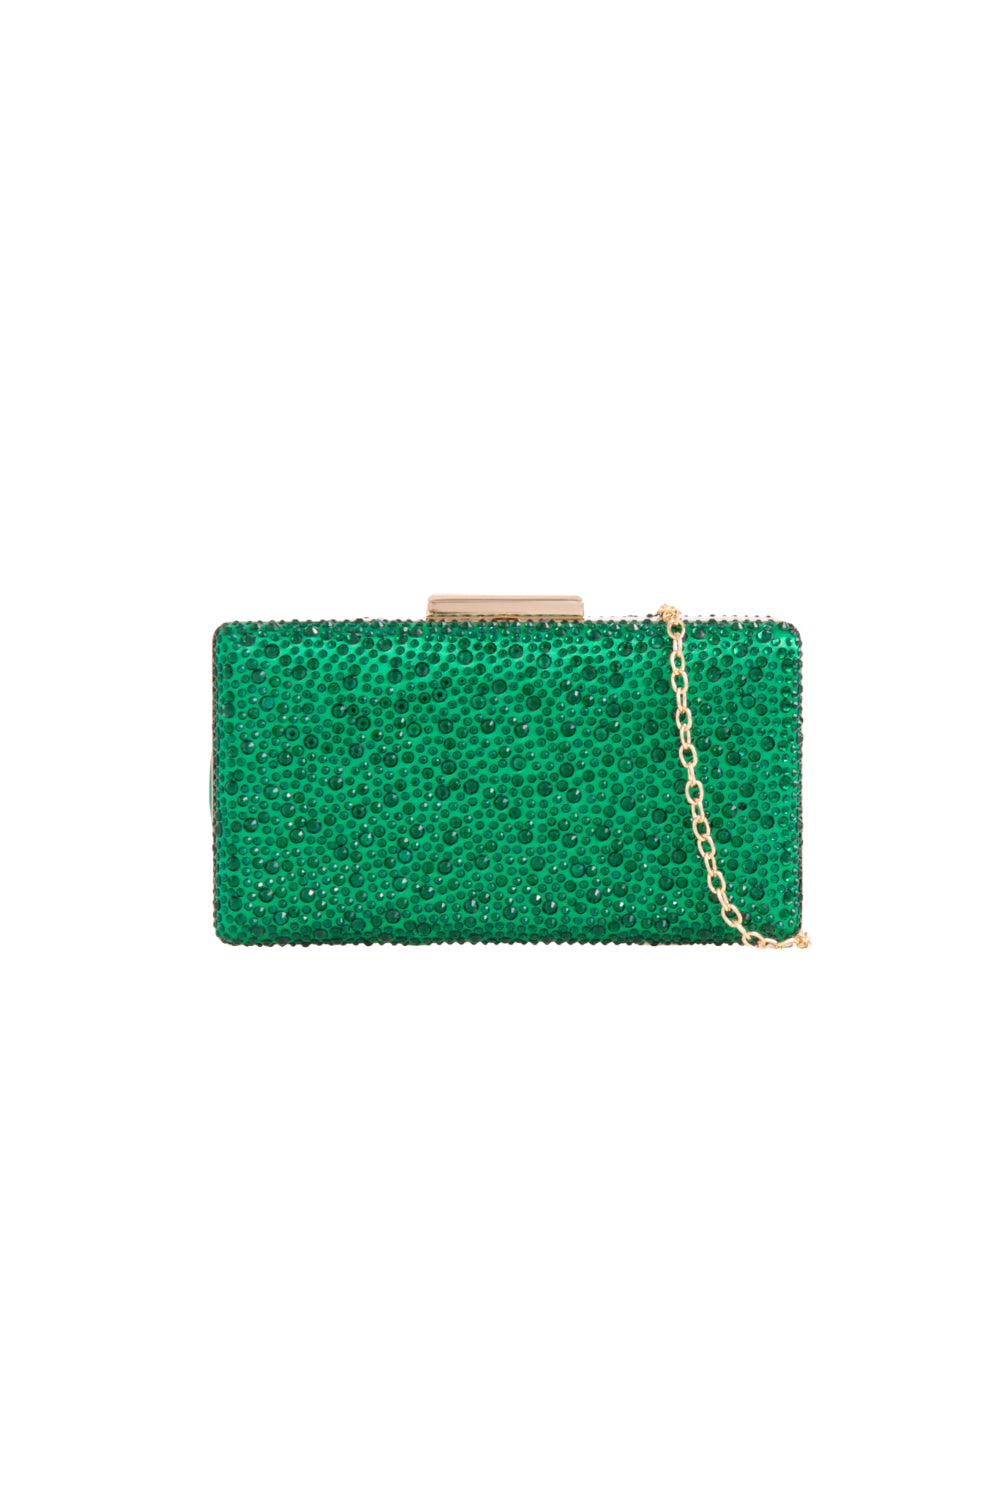 Green Glitter Evening Clutch Bag ALH3105